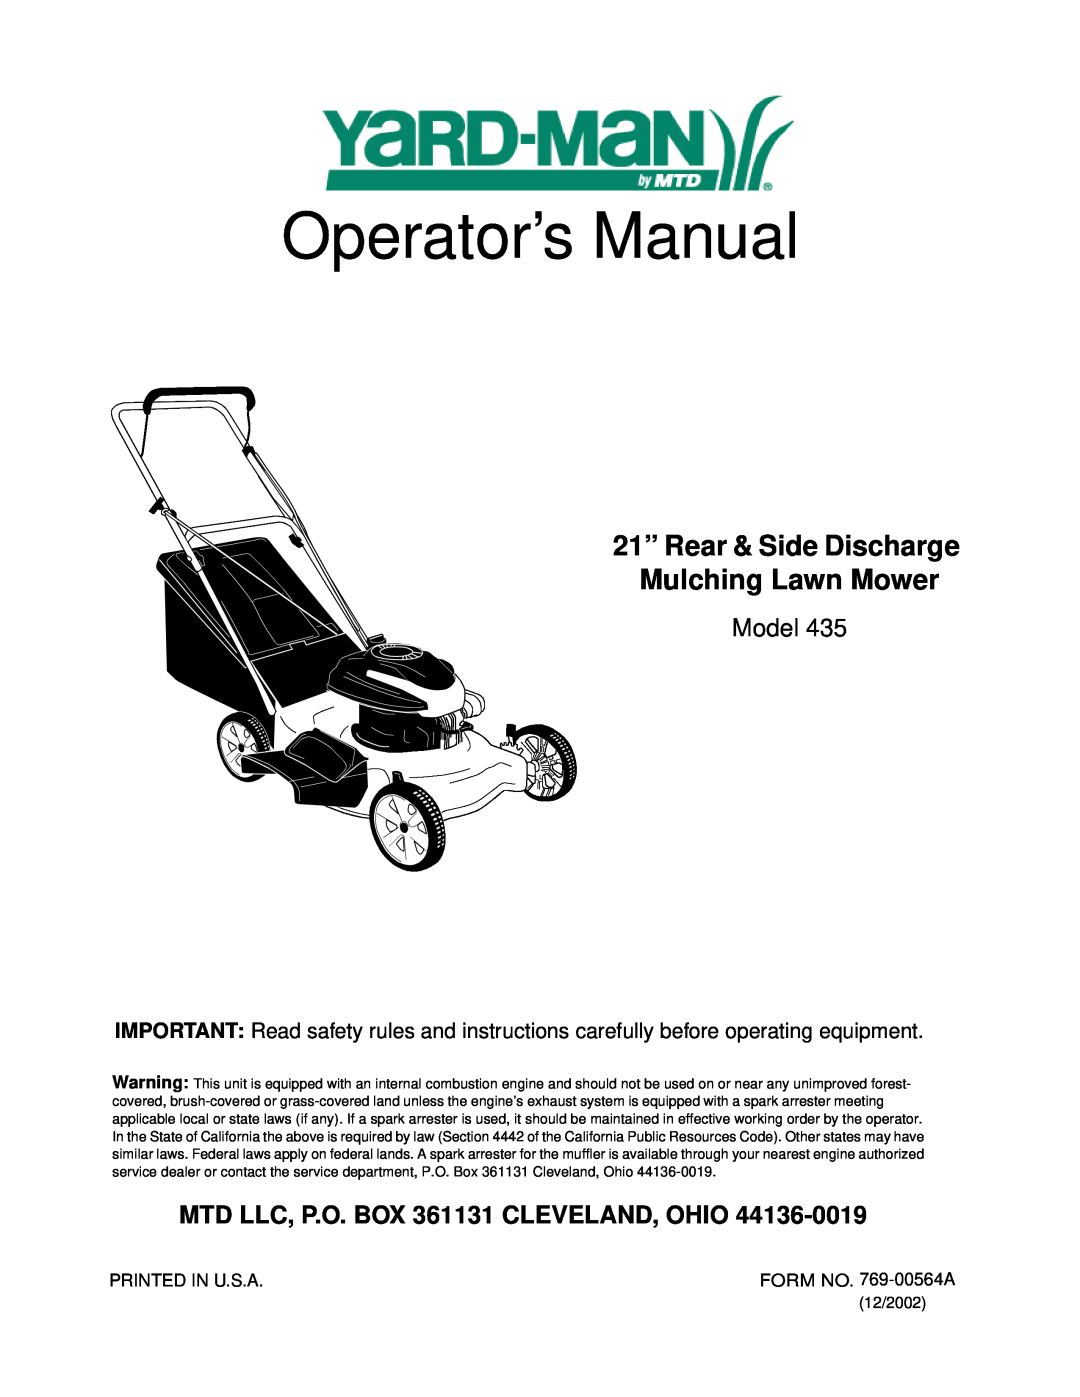 Yard-Man 435 manual Operator’s Manual, 21” Rear & Side Discharge Mulching Lawn Mower, Model 